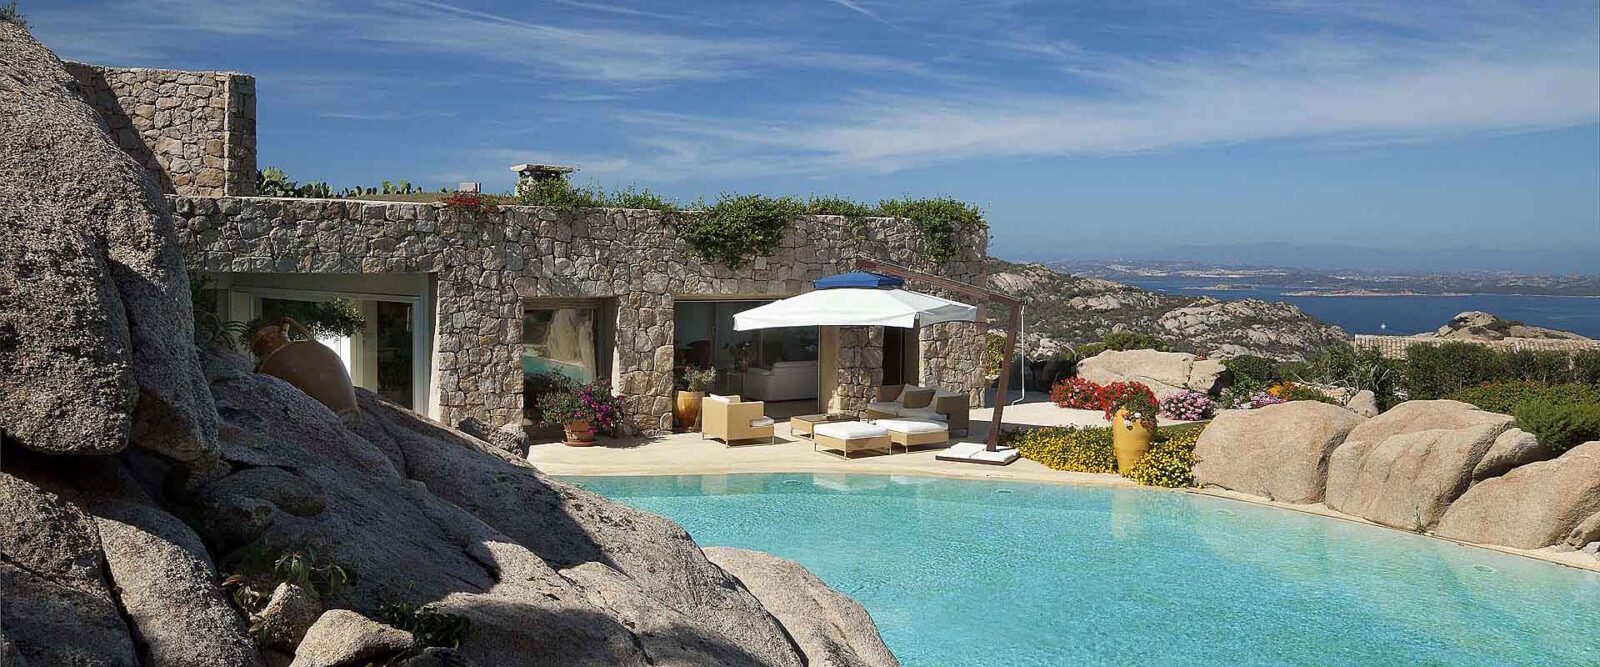 Luxury-Villa-Portocervo-Sardinia-Italy-rent-sale-5